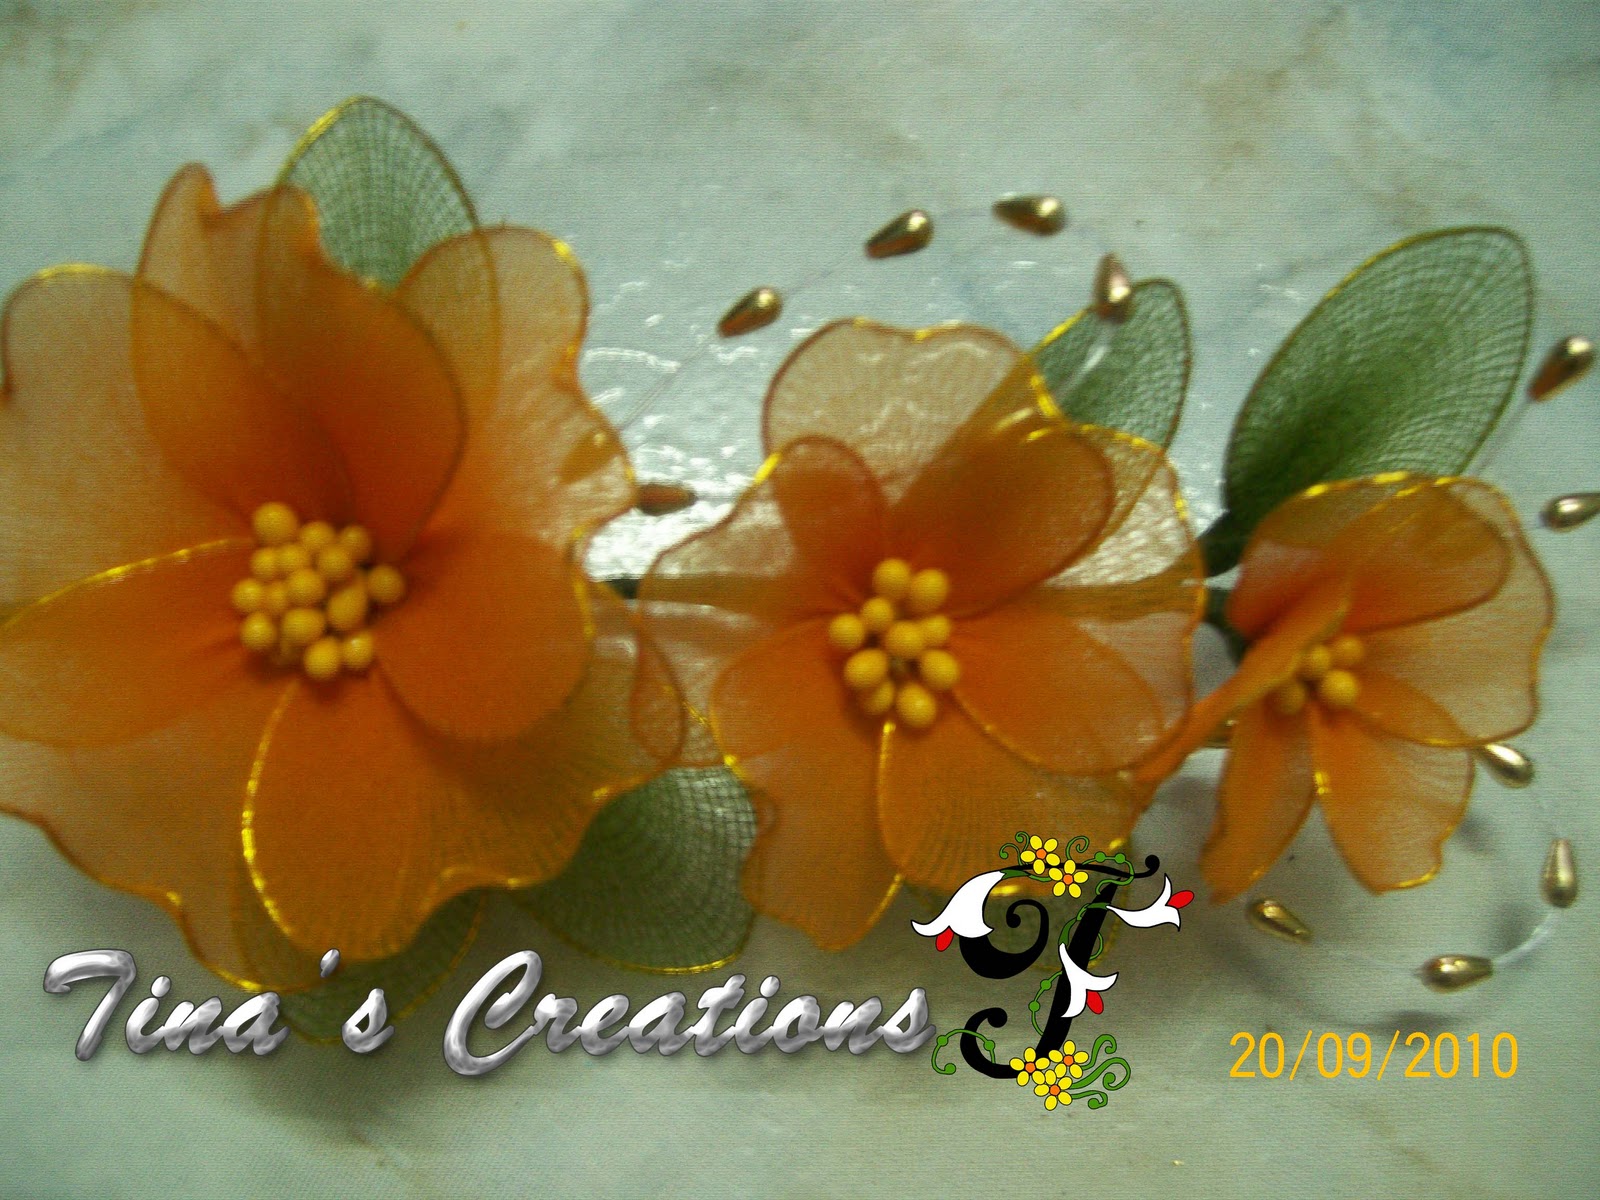 Tinas Creations: Stocking flower Arrangements